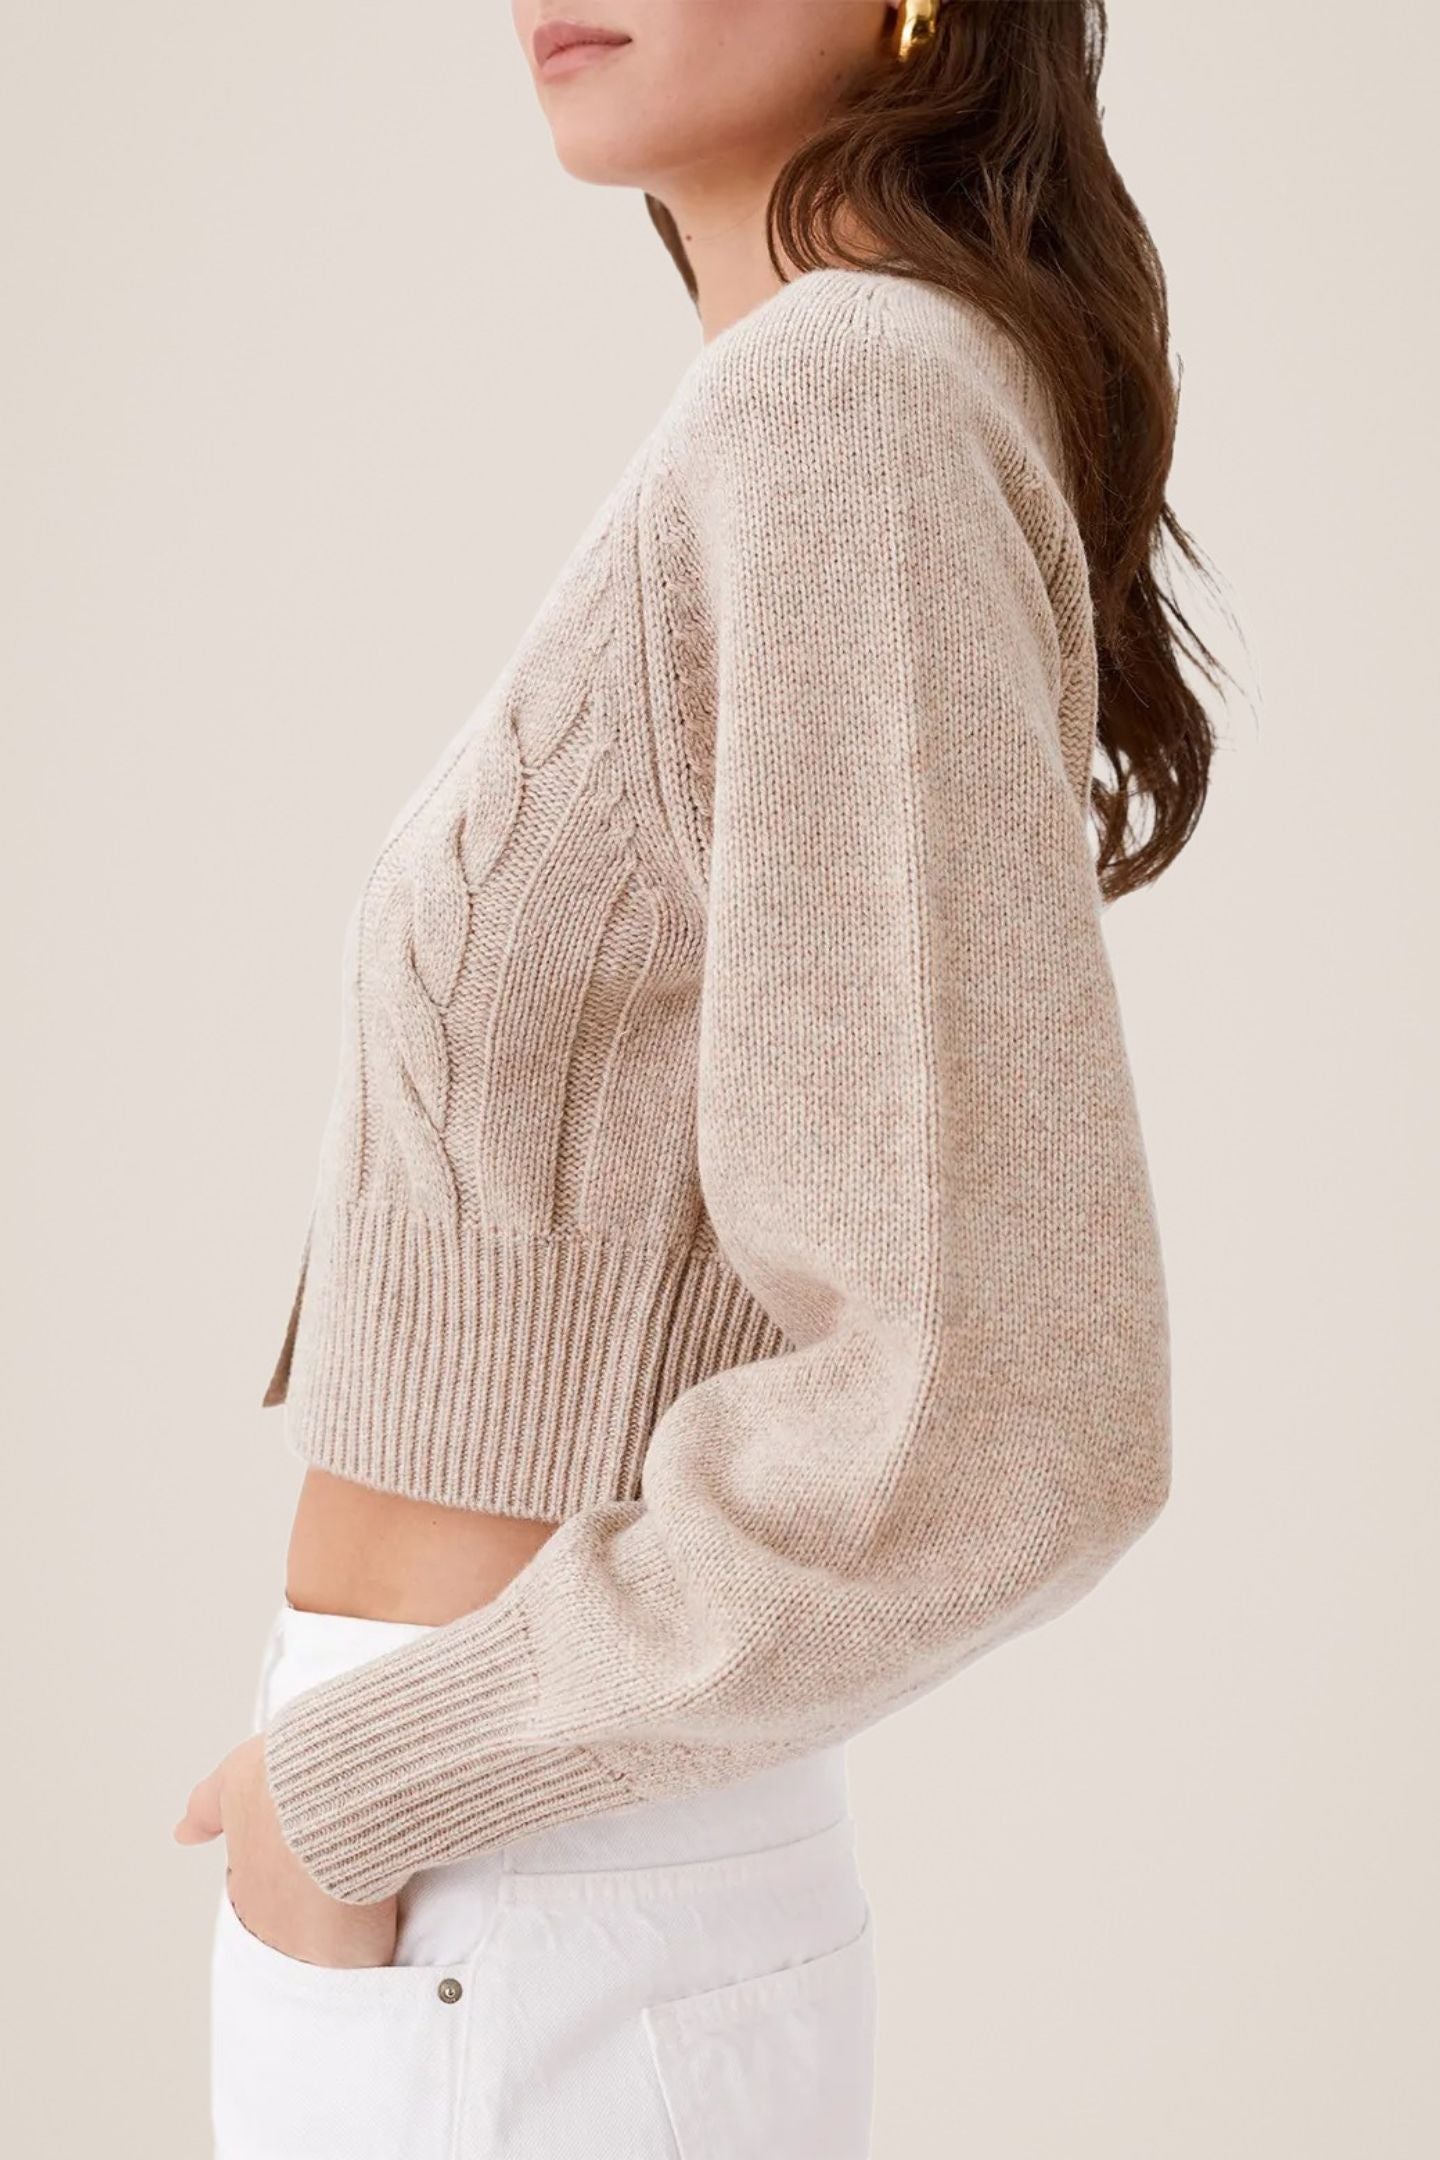 Rita beige cashmere wool chunky knit cropped cardi cardigan - Toccin